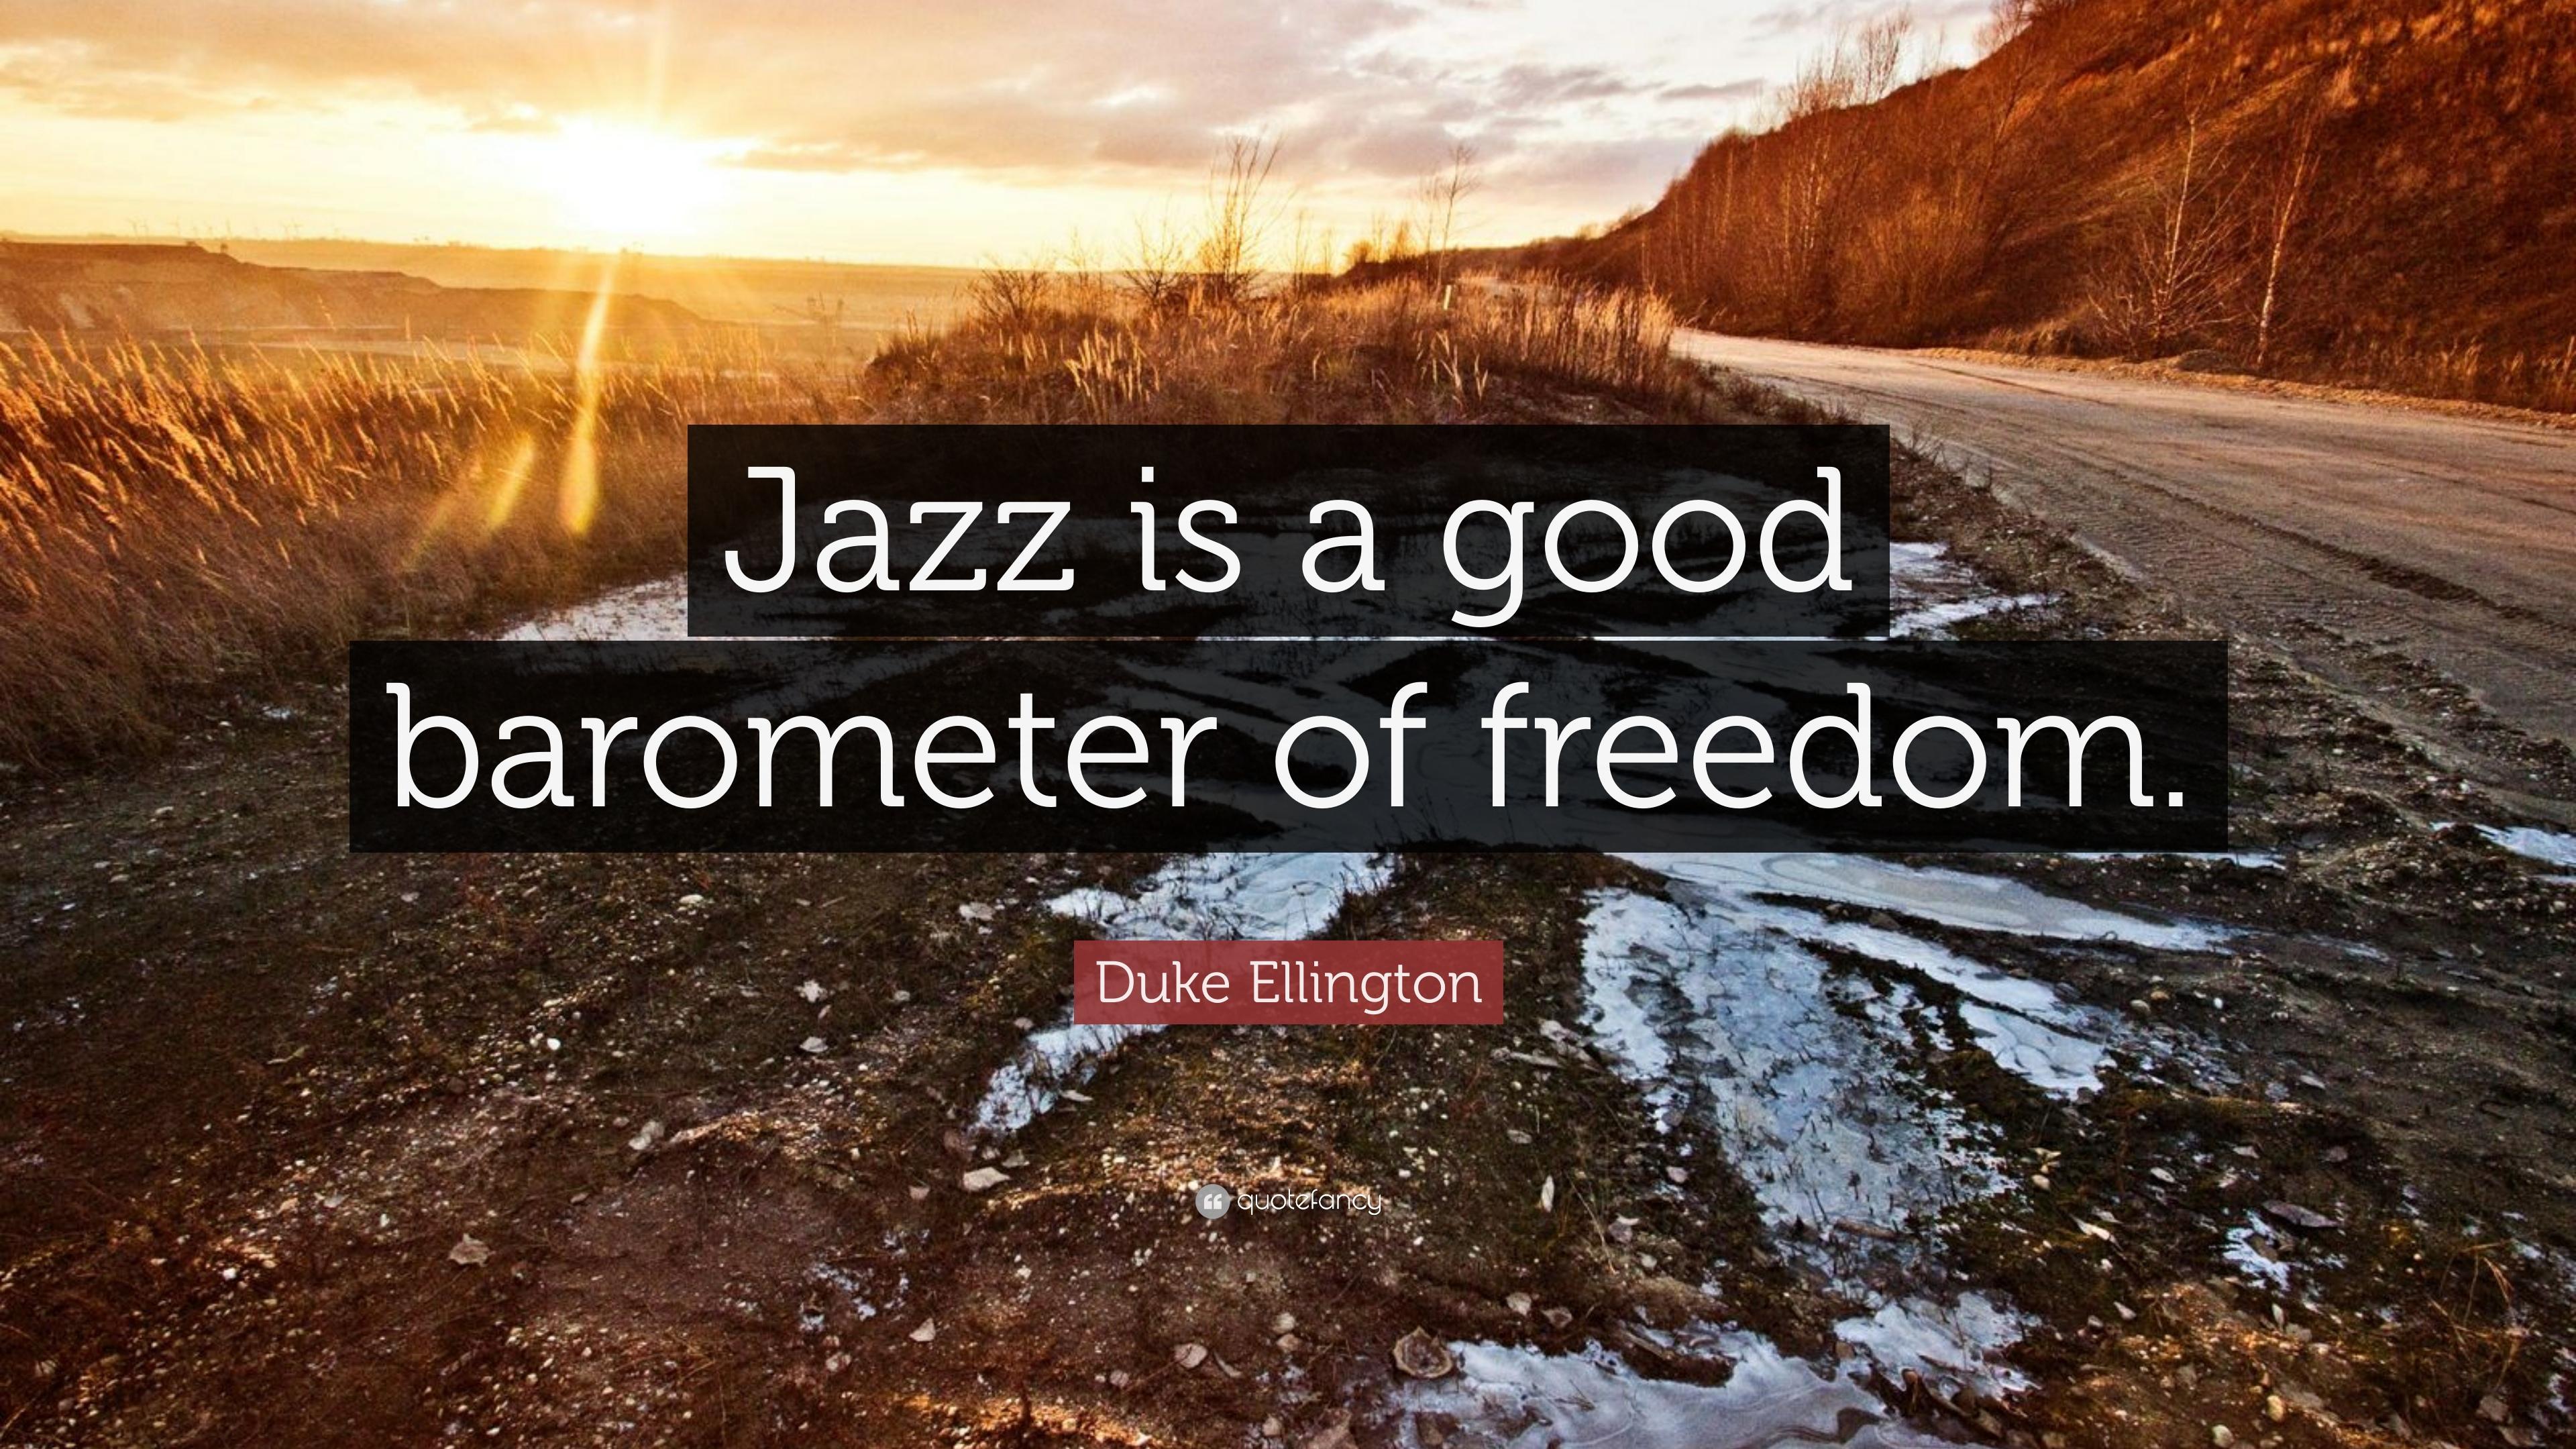 Duke Ellington Quote: “Jazz is a good barometer of freedom